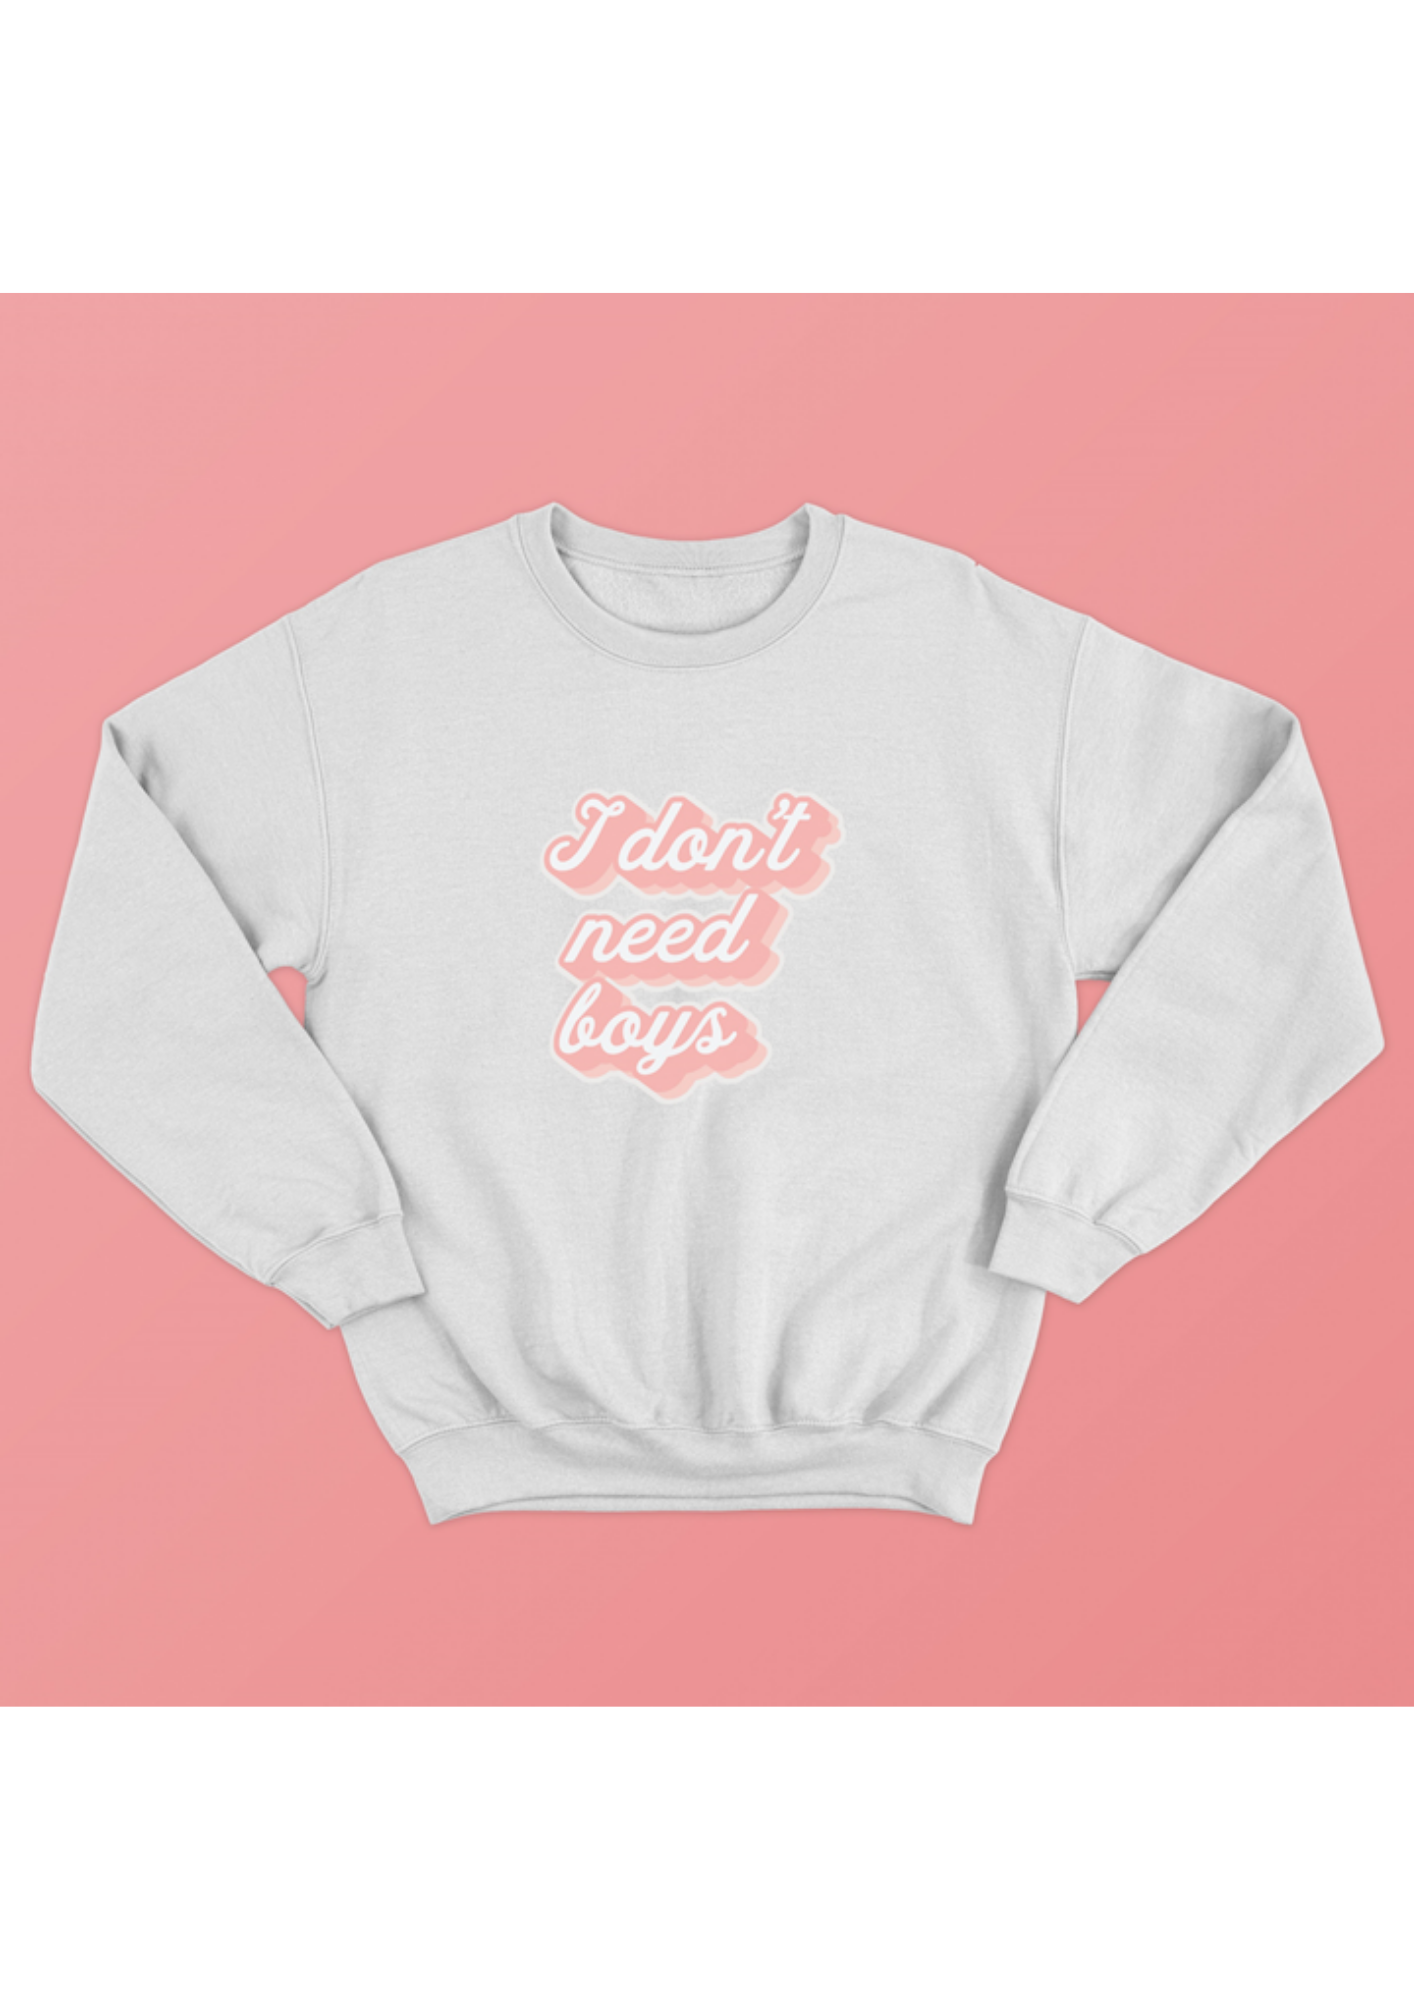 white " I don't need boys" crew neck sweatshirt over pink background